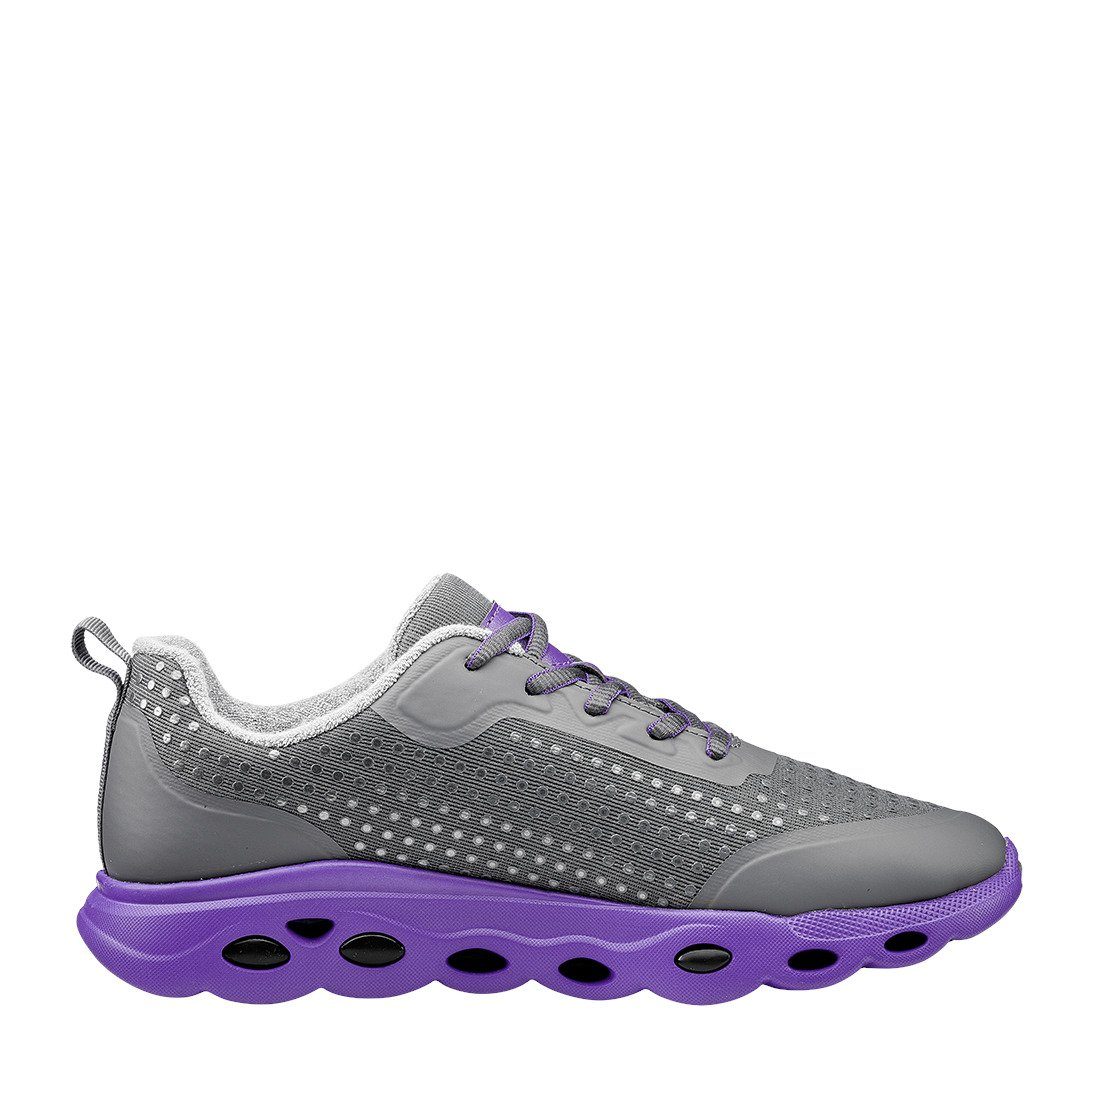 Materialmix 043619 - Ara Ara Schuhe, Sneaker Sneaker Racer Damen grau